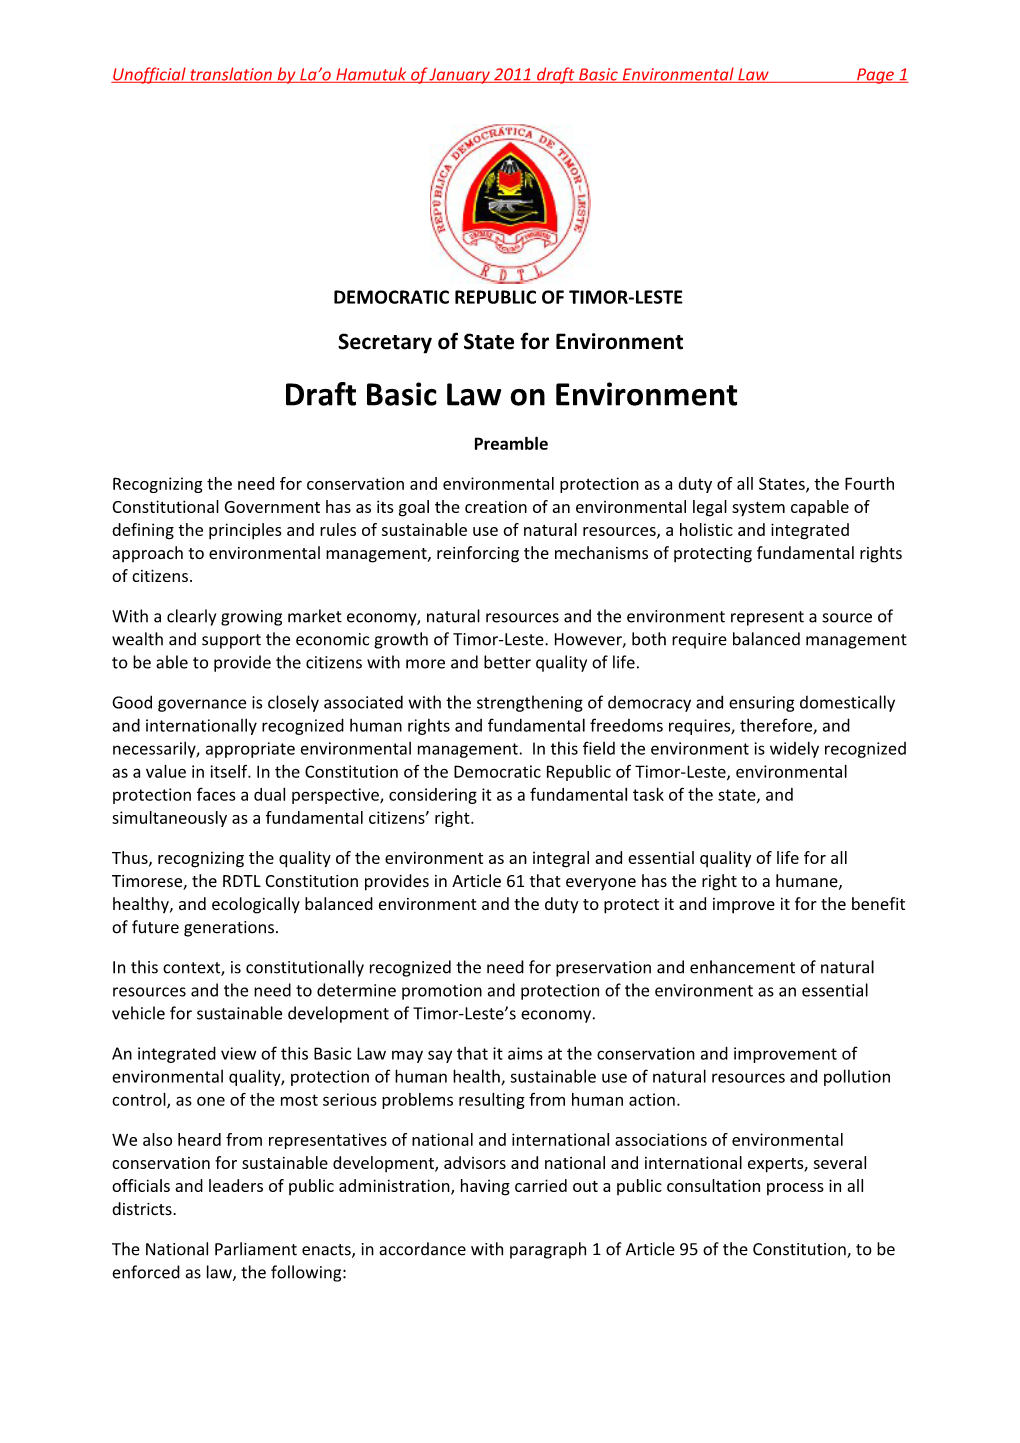 Draft Basic Environmental Law